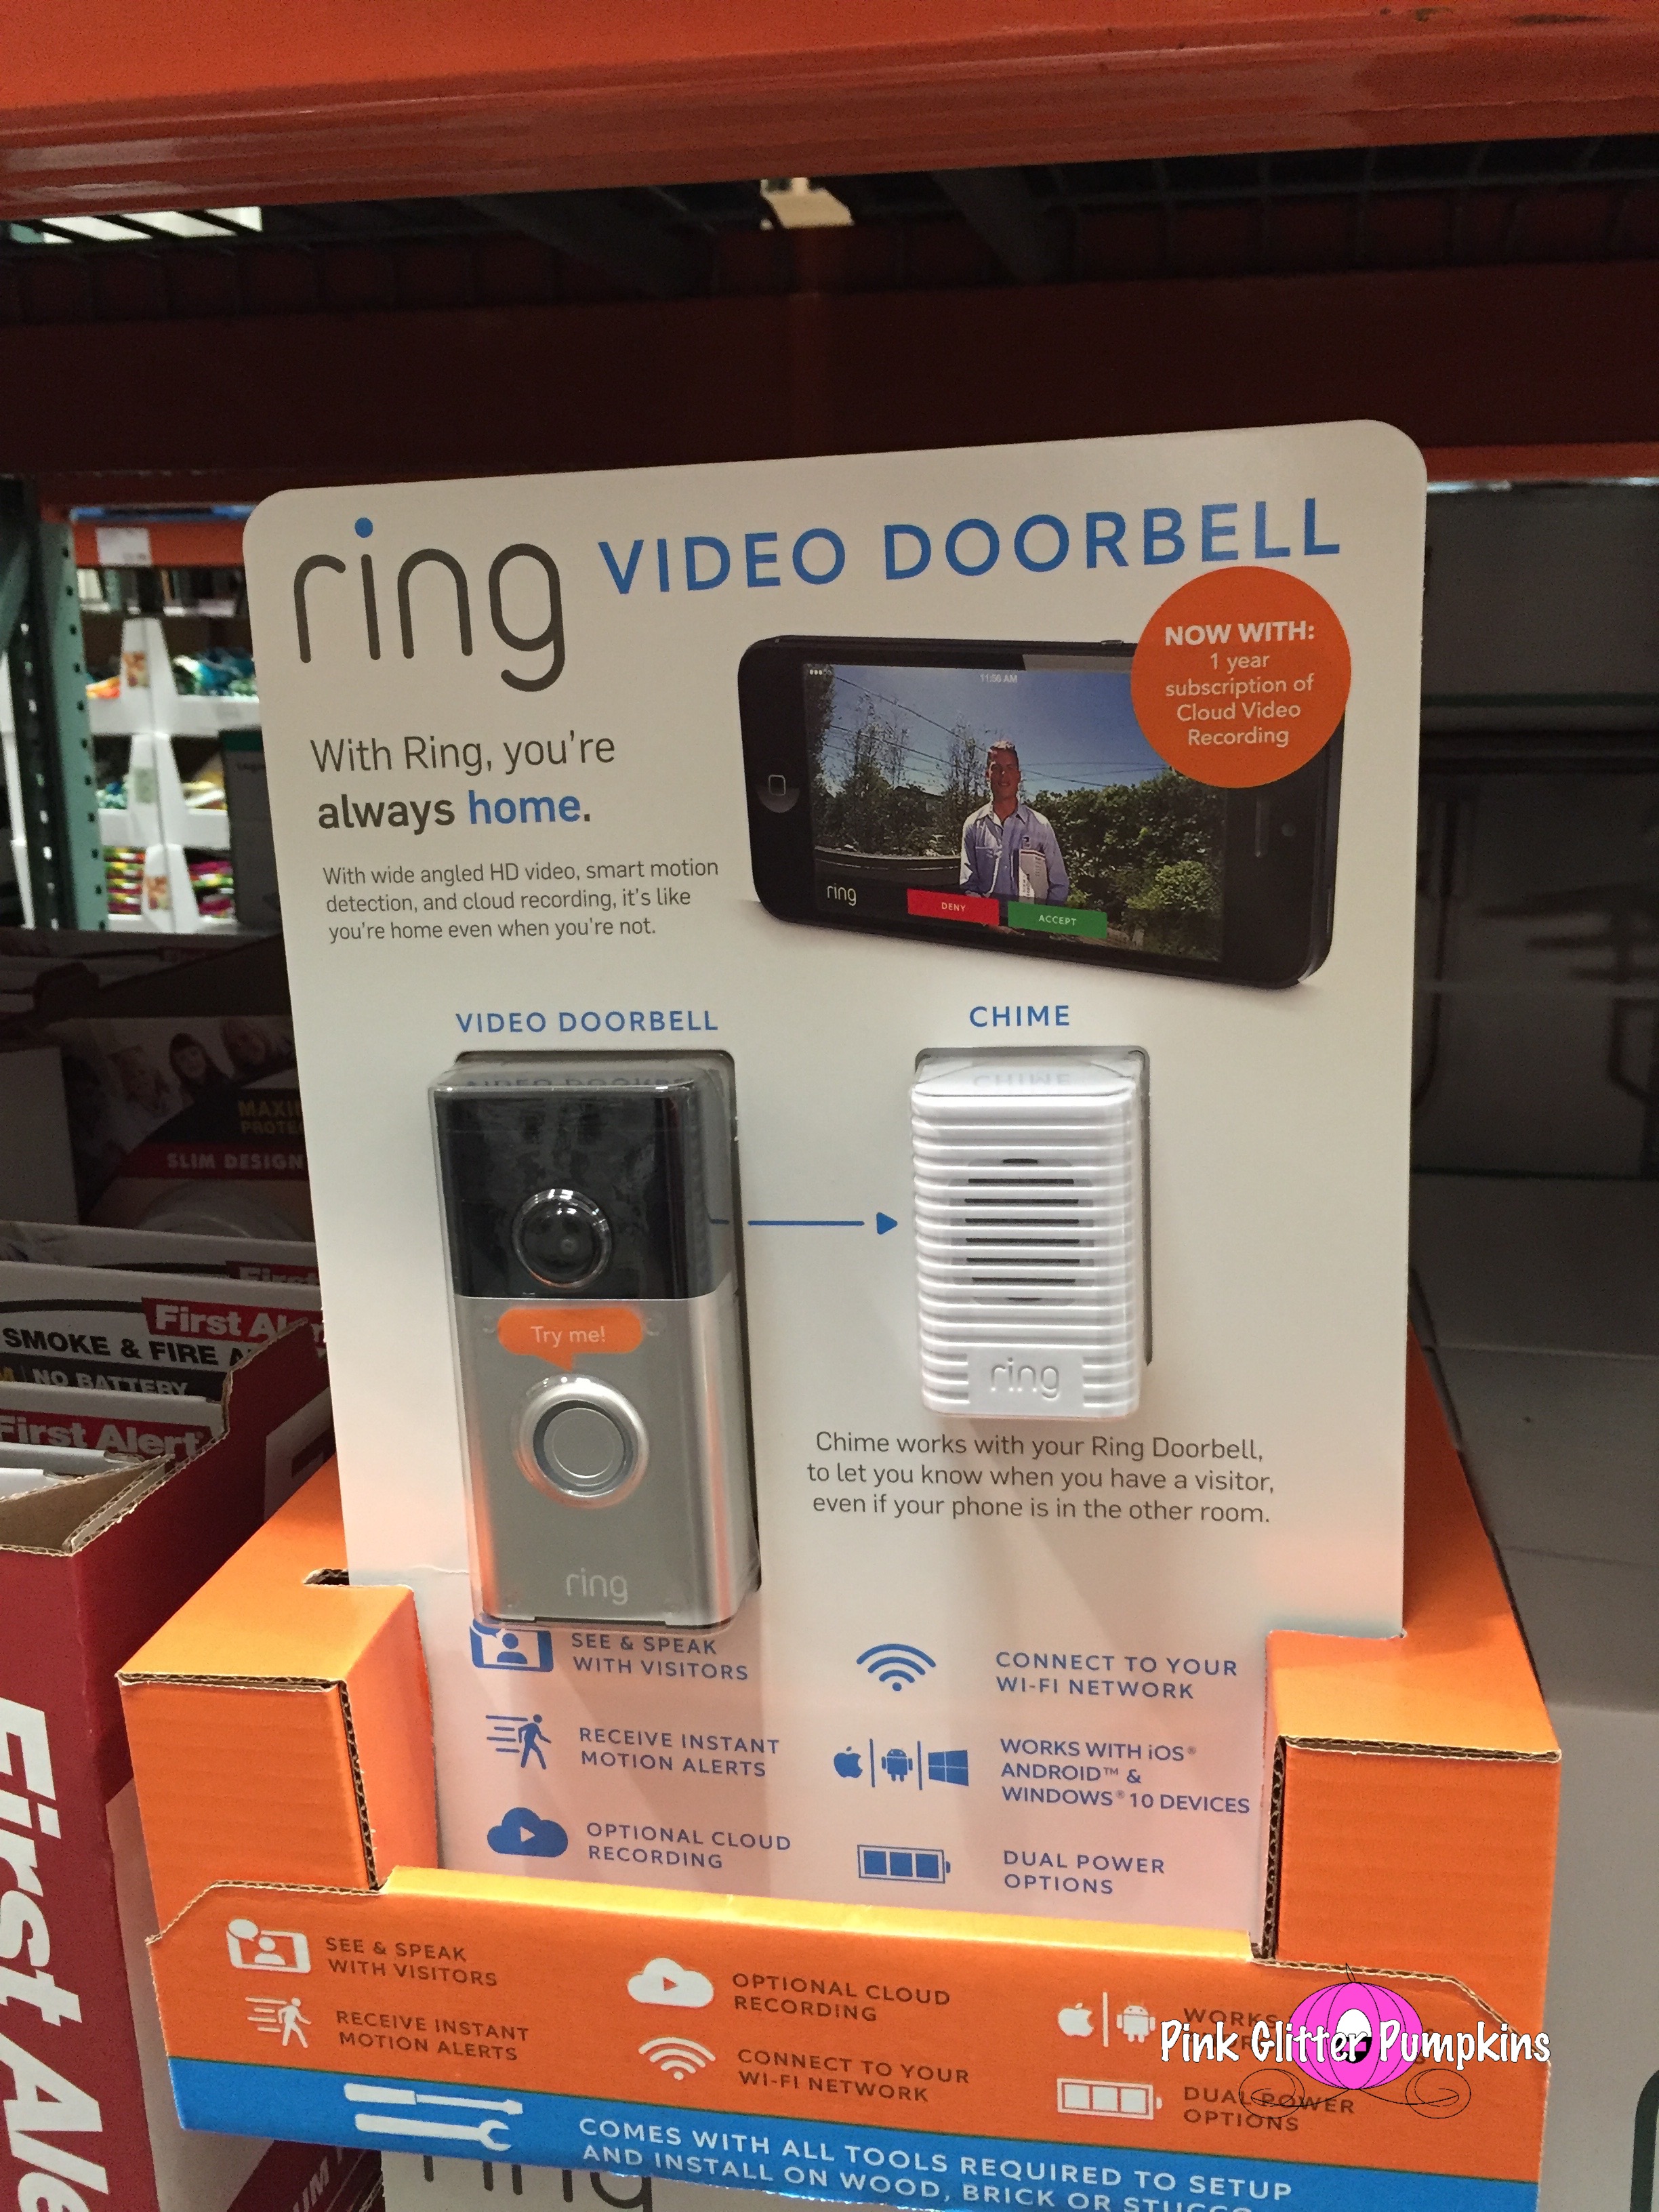 ring doorbell from costco